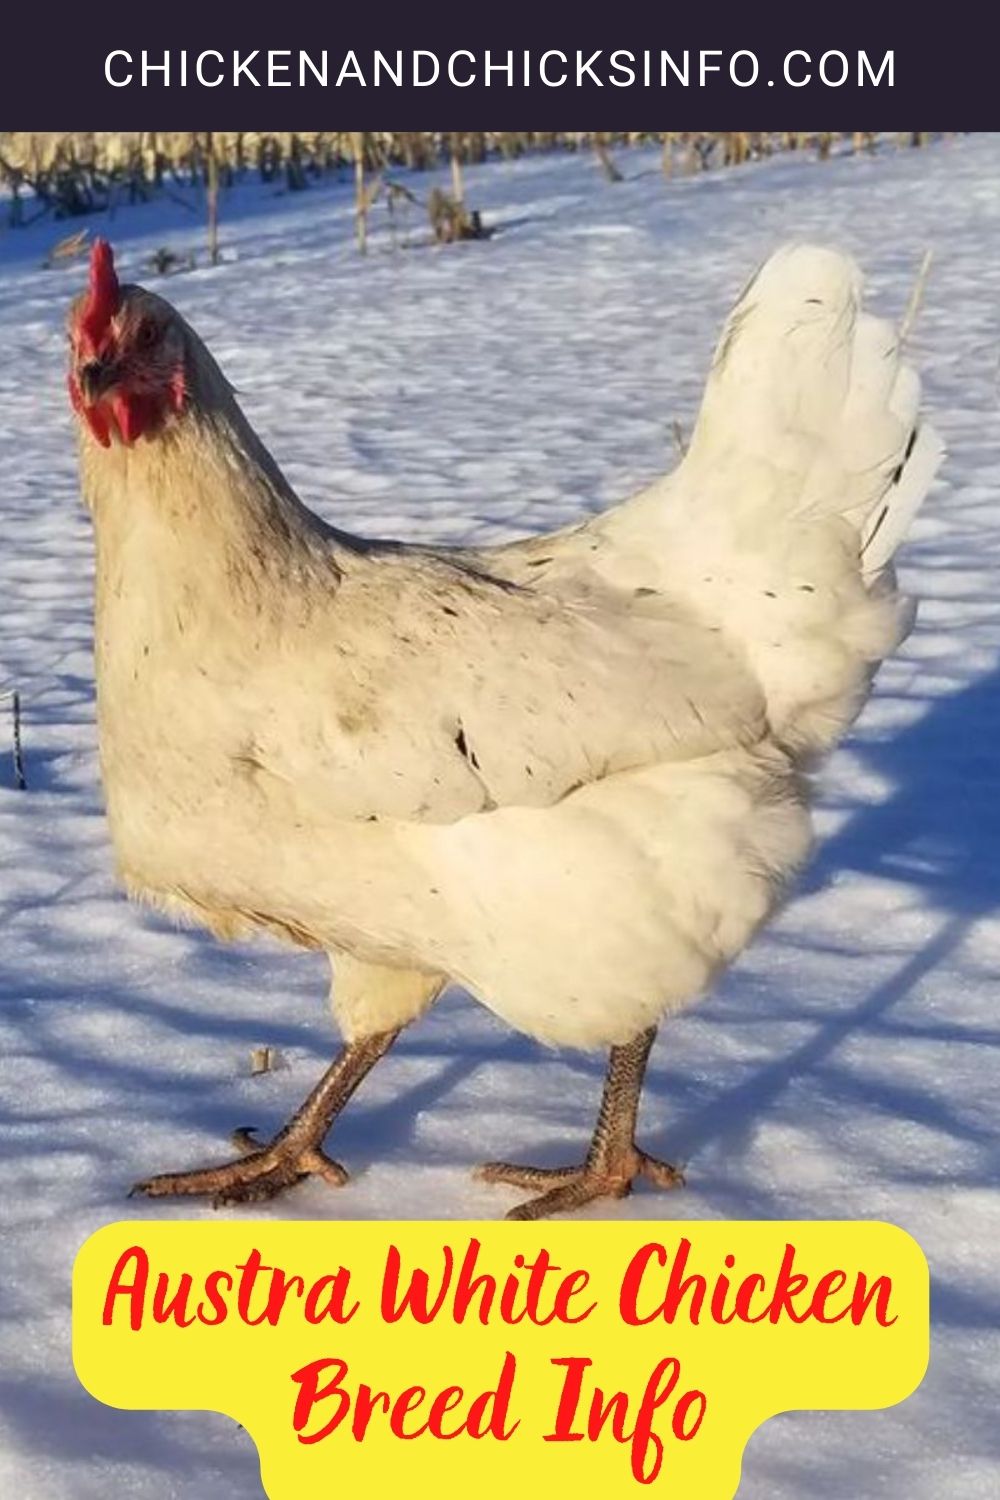 Austra White Chicken Breed Info pinterest image.